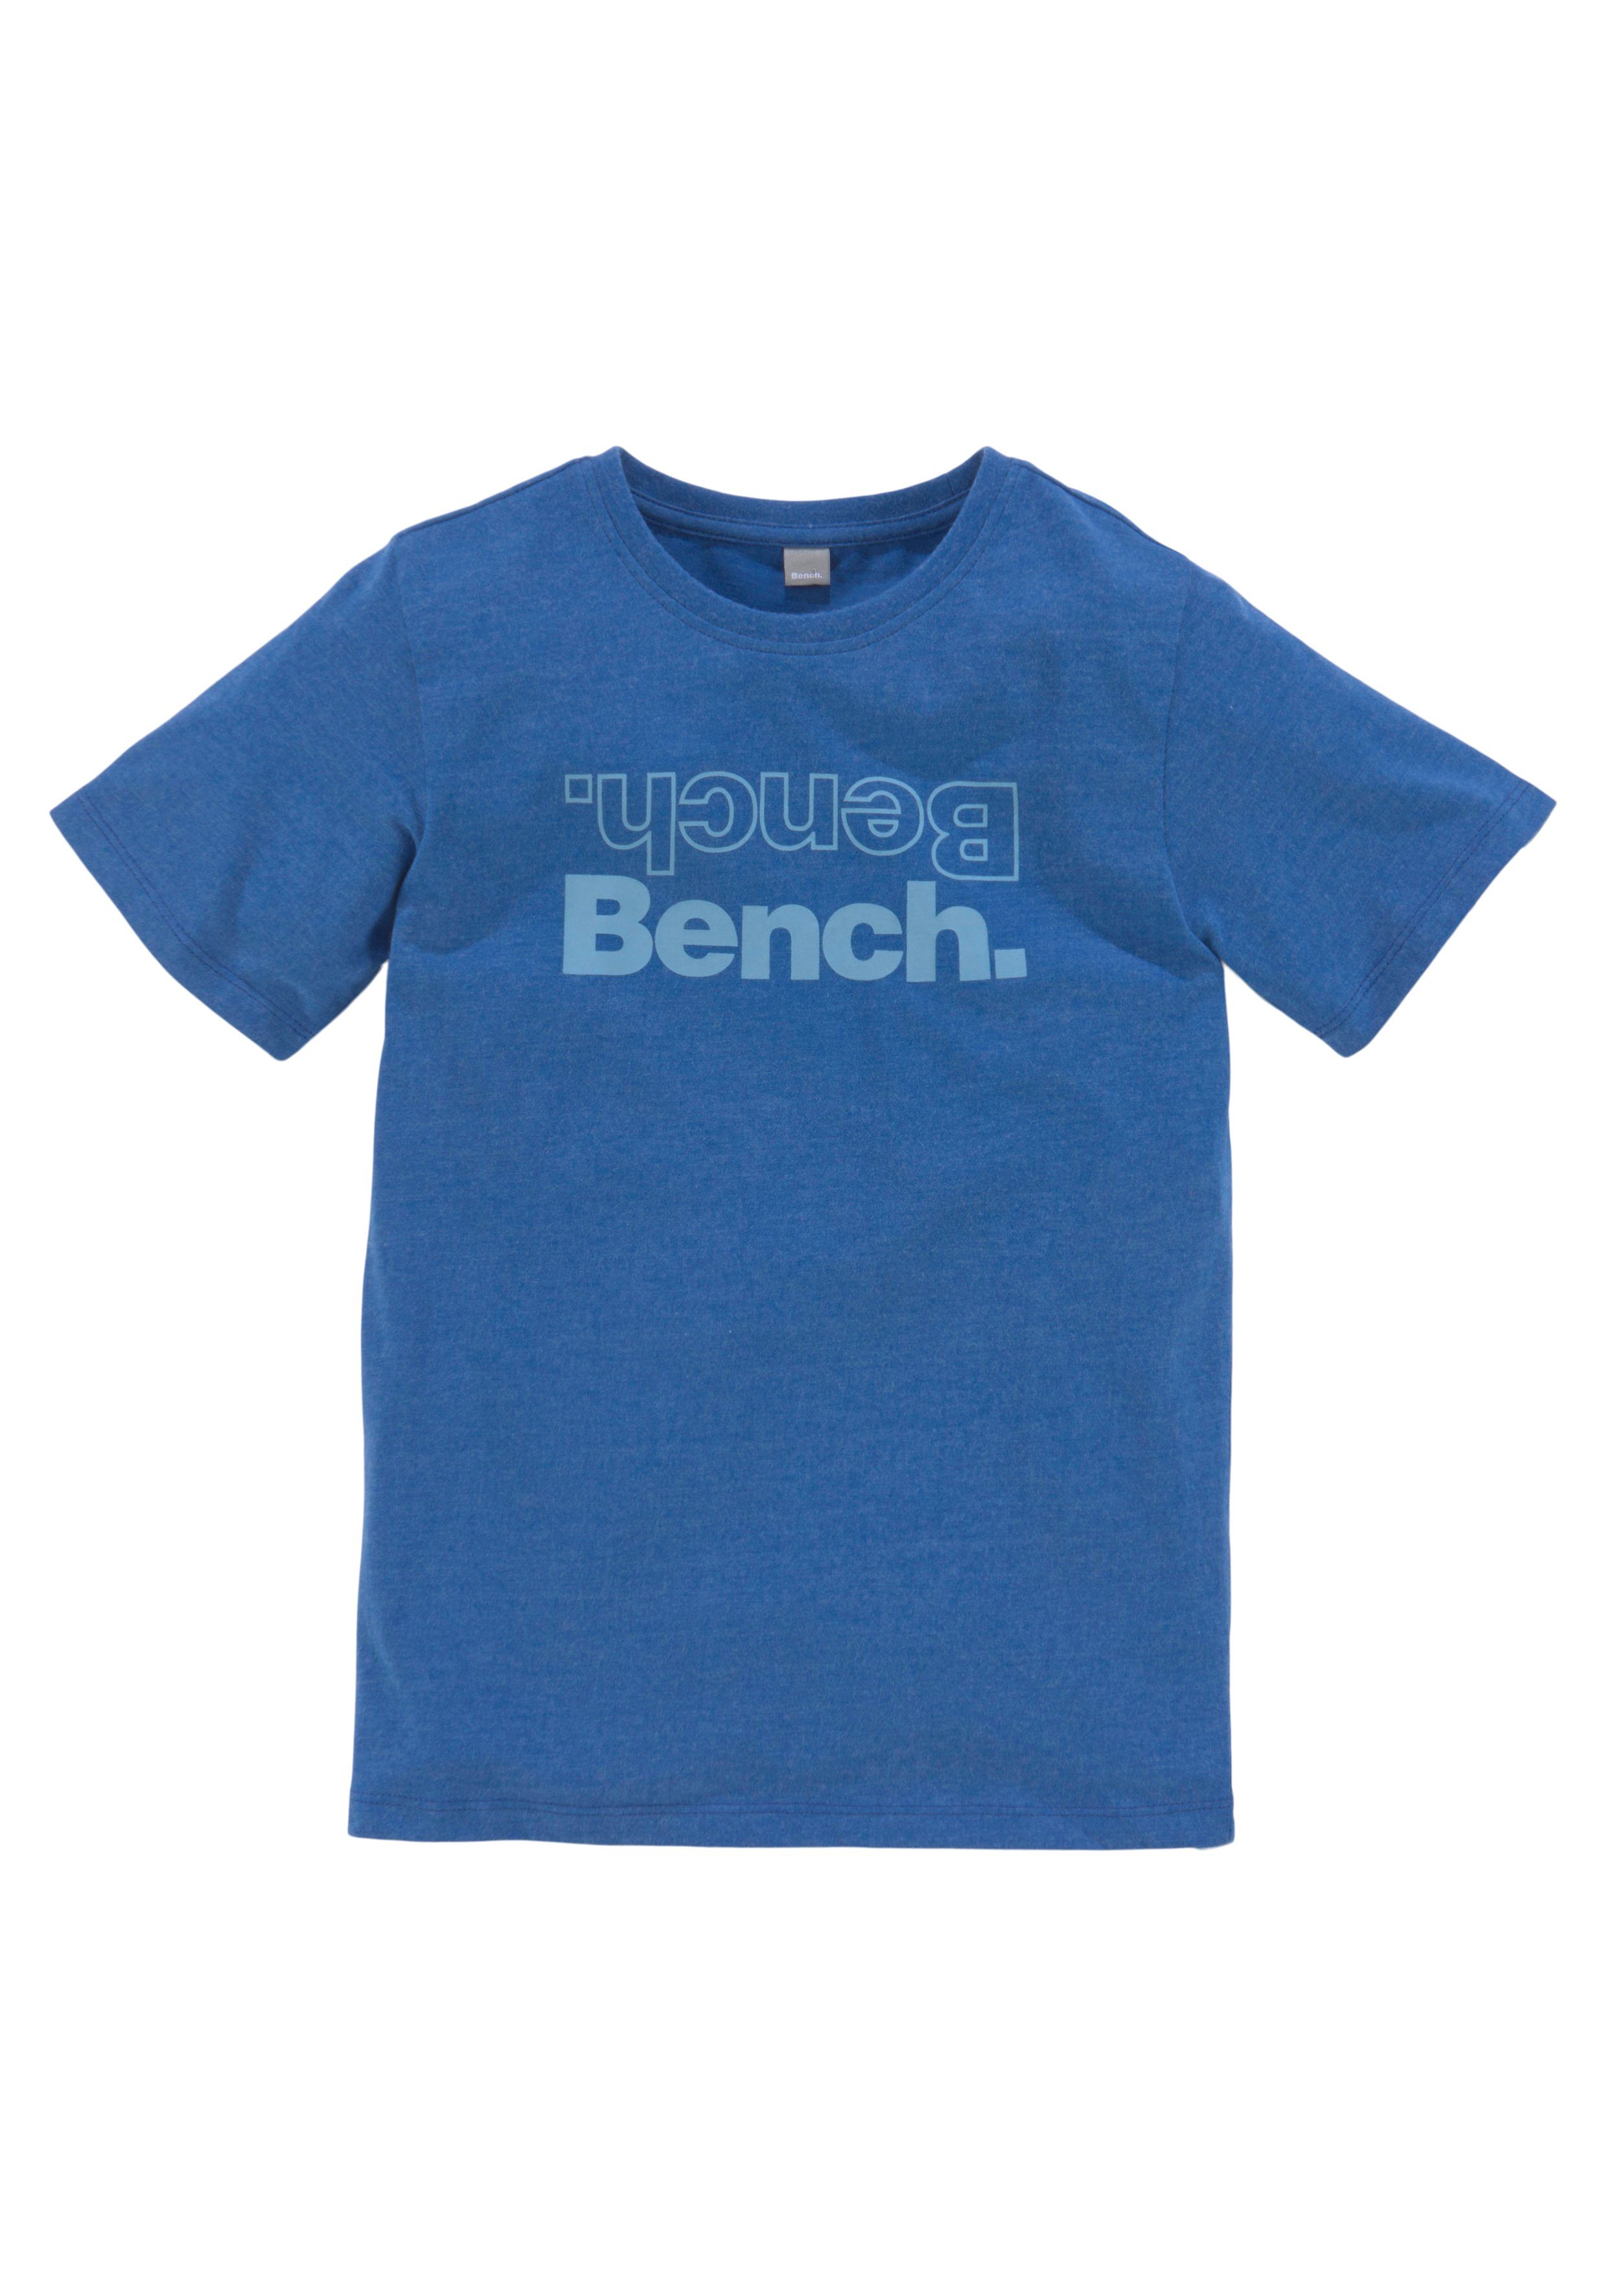 T-Shirt Bench. coolem Brustdruck mit